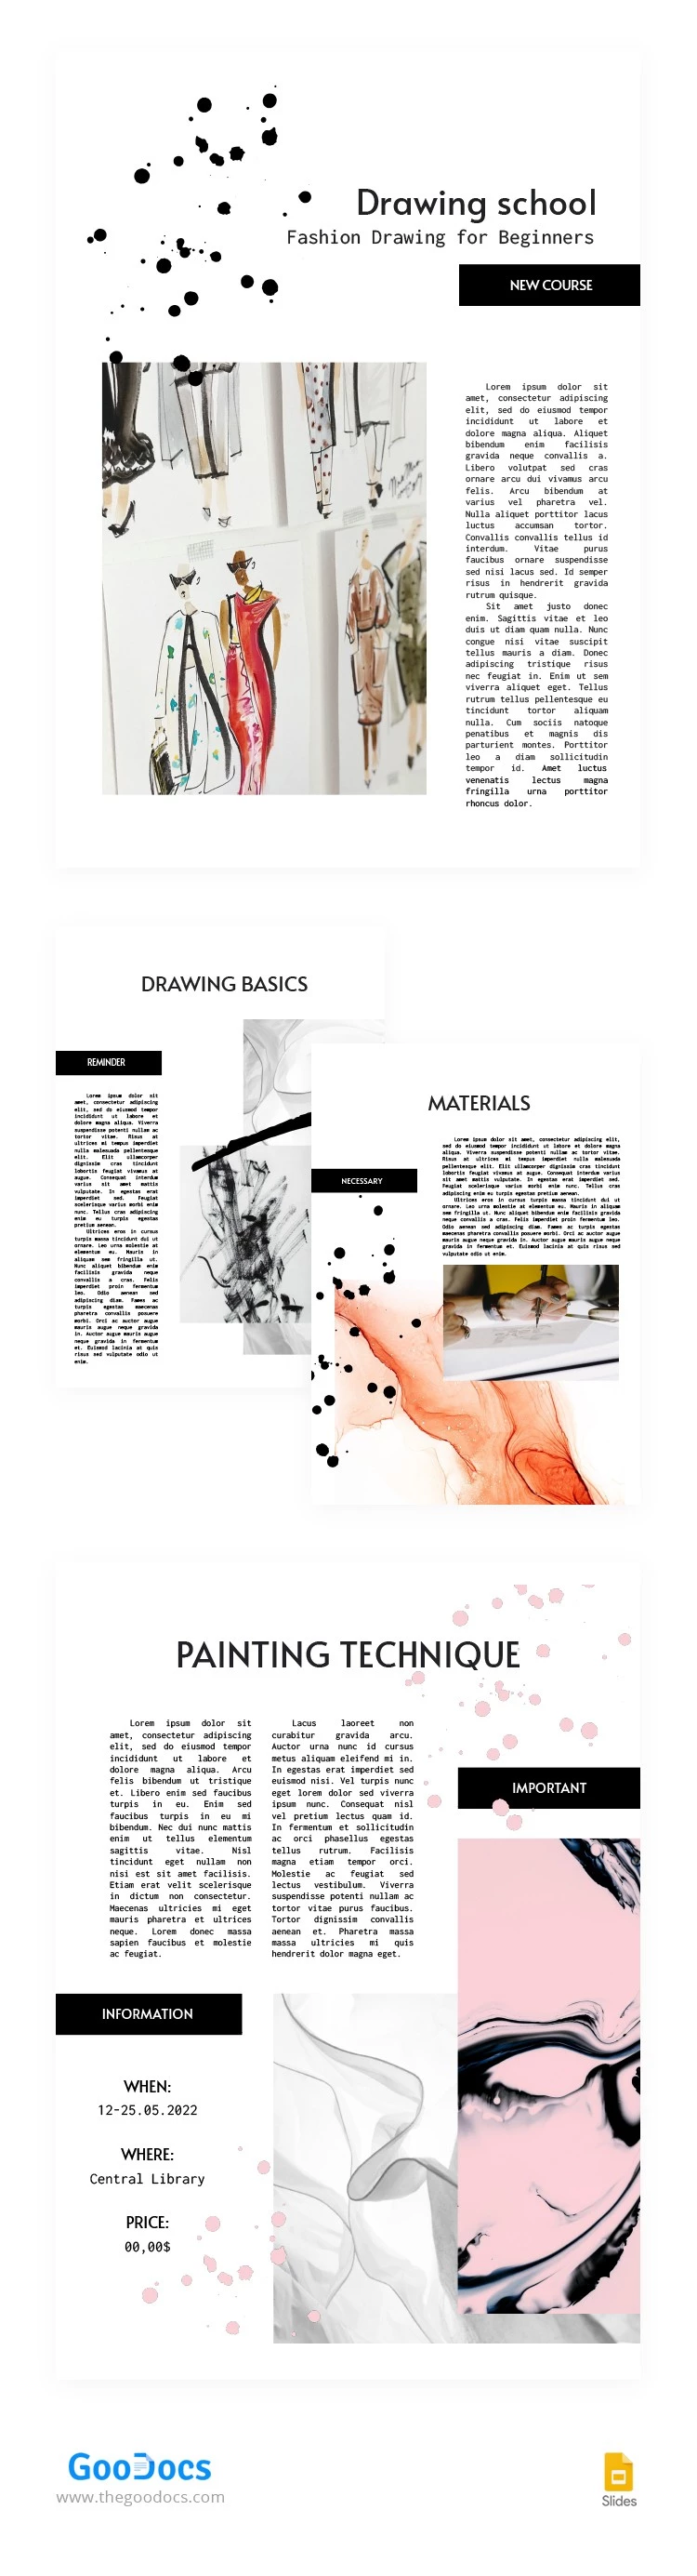 Drawing School Newsletter - free Google Docs Template - 10062935